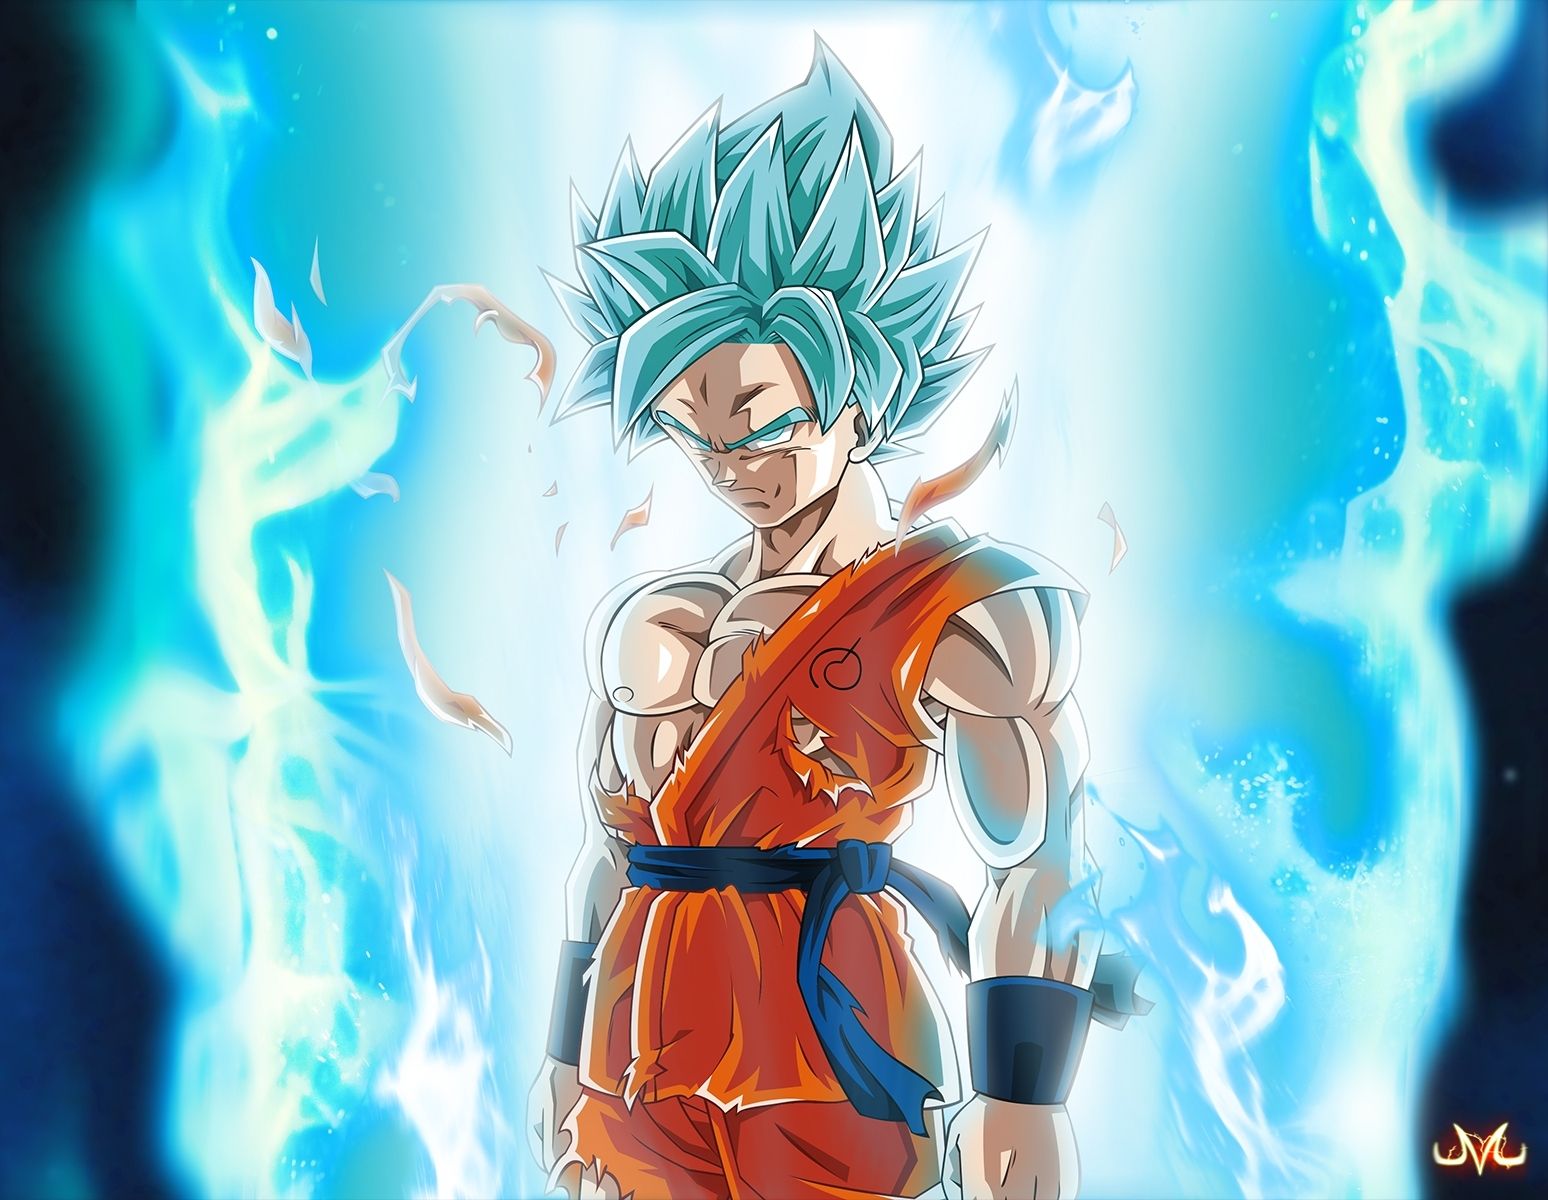 Latest Goku Super Saiyan God Super Saiyan Wallpaper HD FULL HD 1080p For PC Background. Goku super saiyan god, Super saiyan god, Goku super saiyan